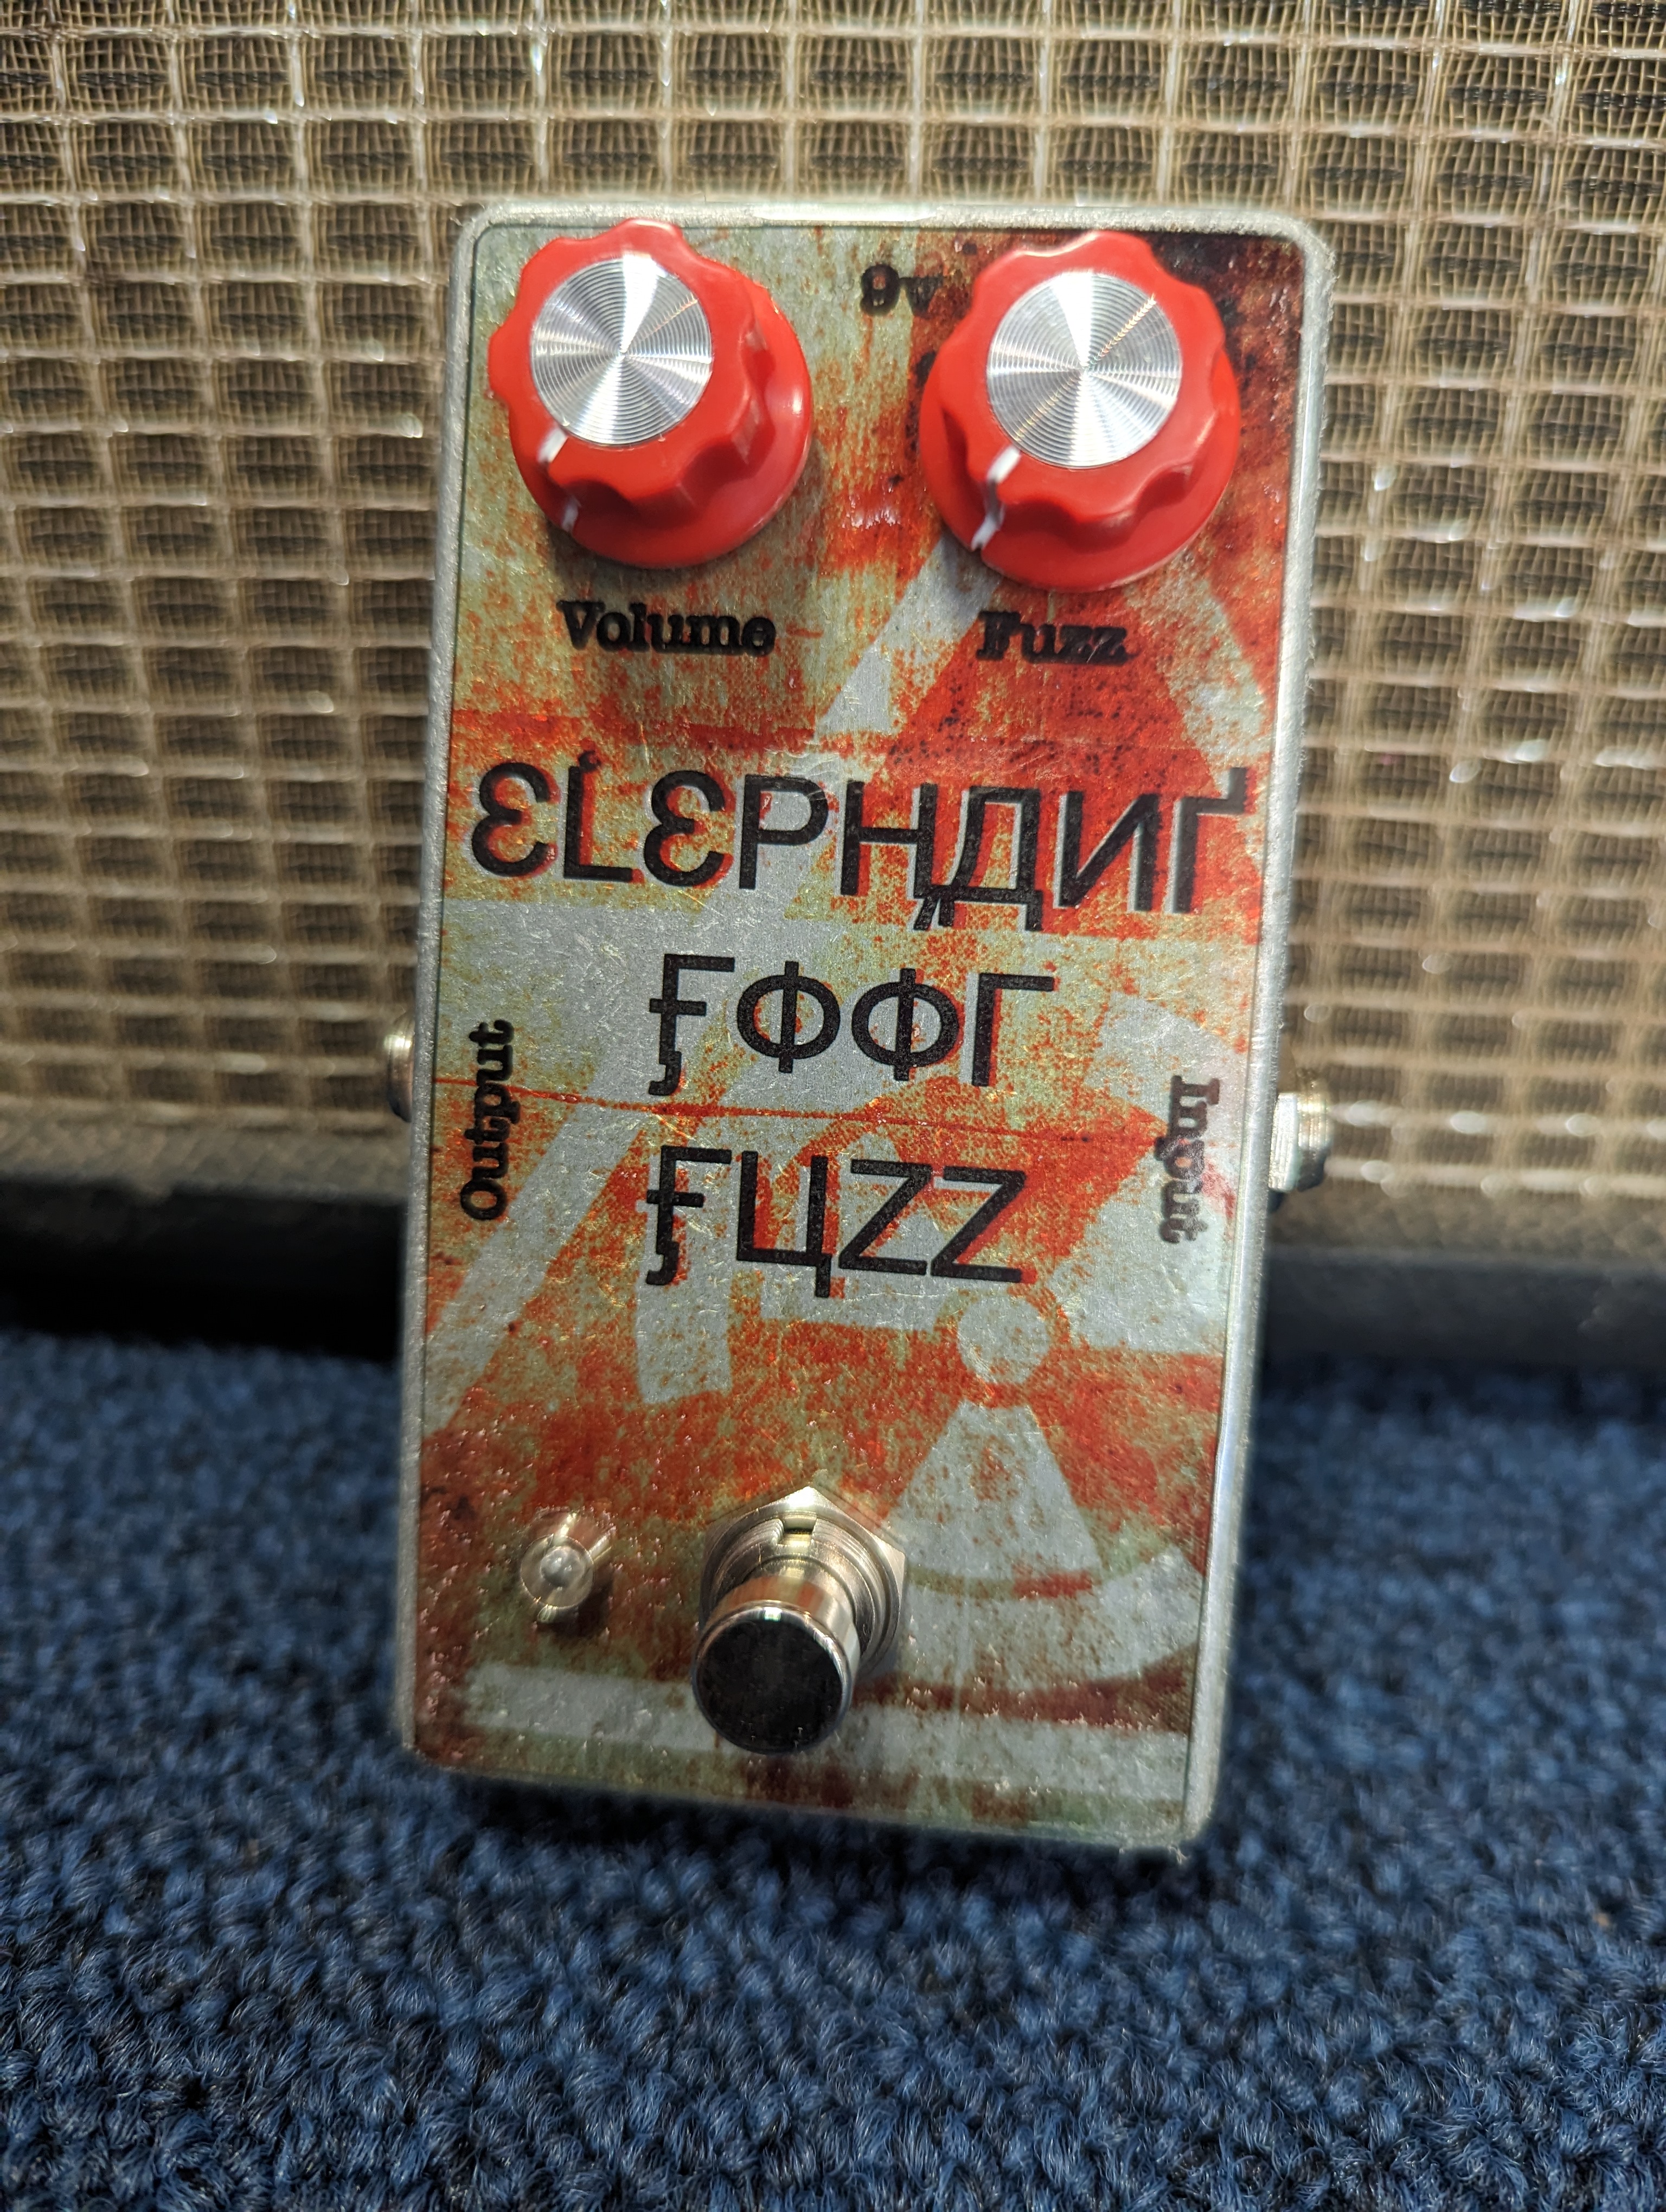 guitar pedals elephant foot fuzz